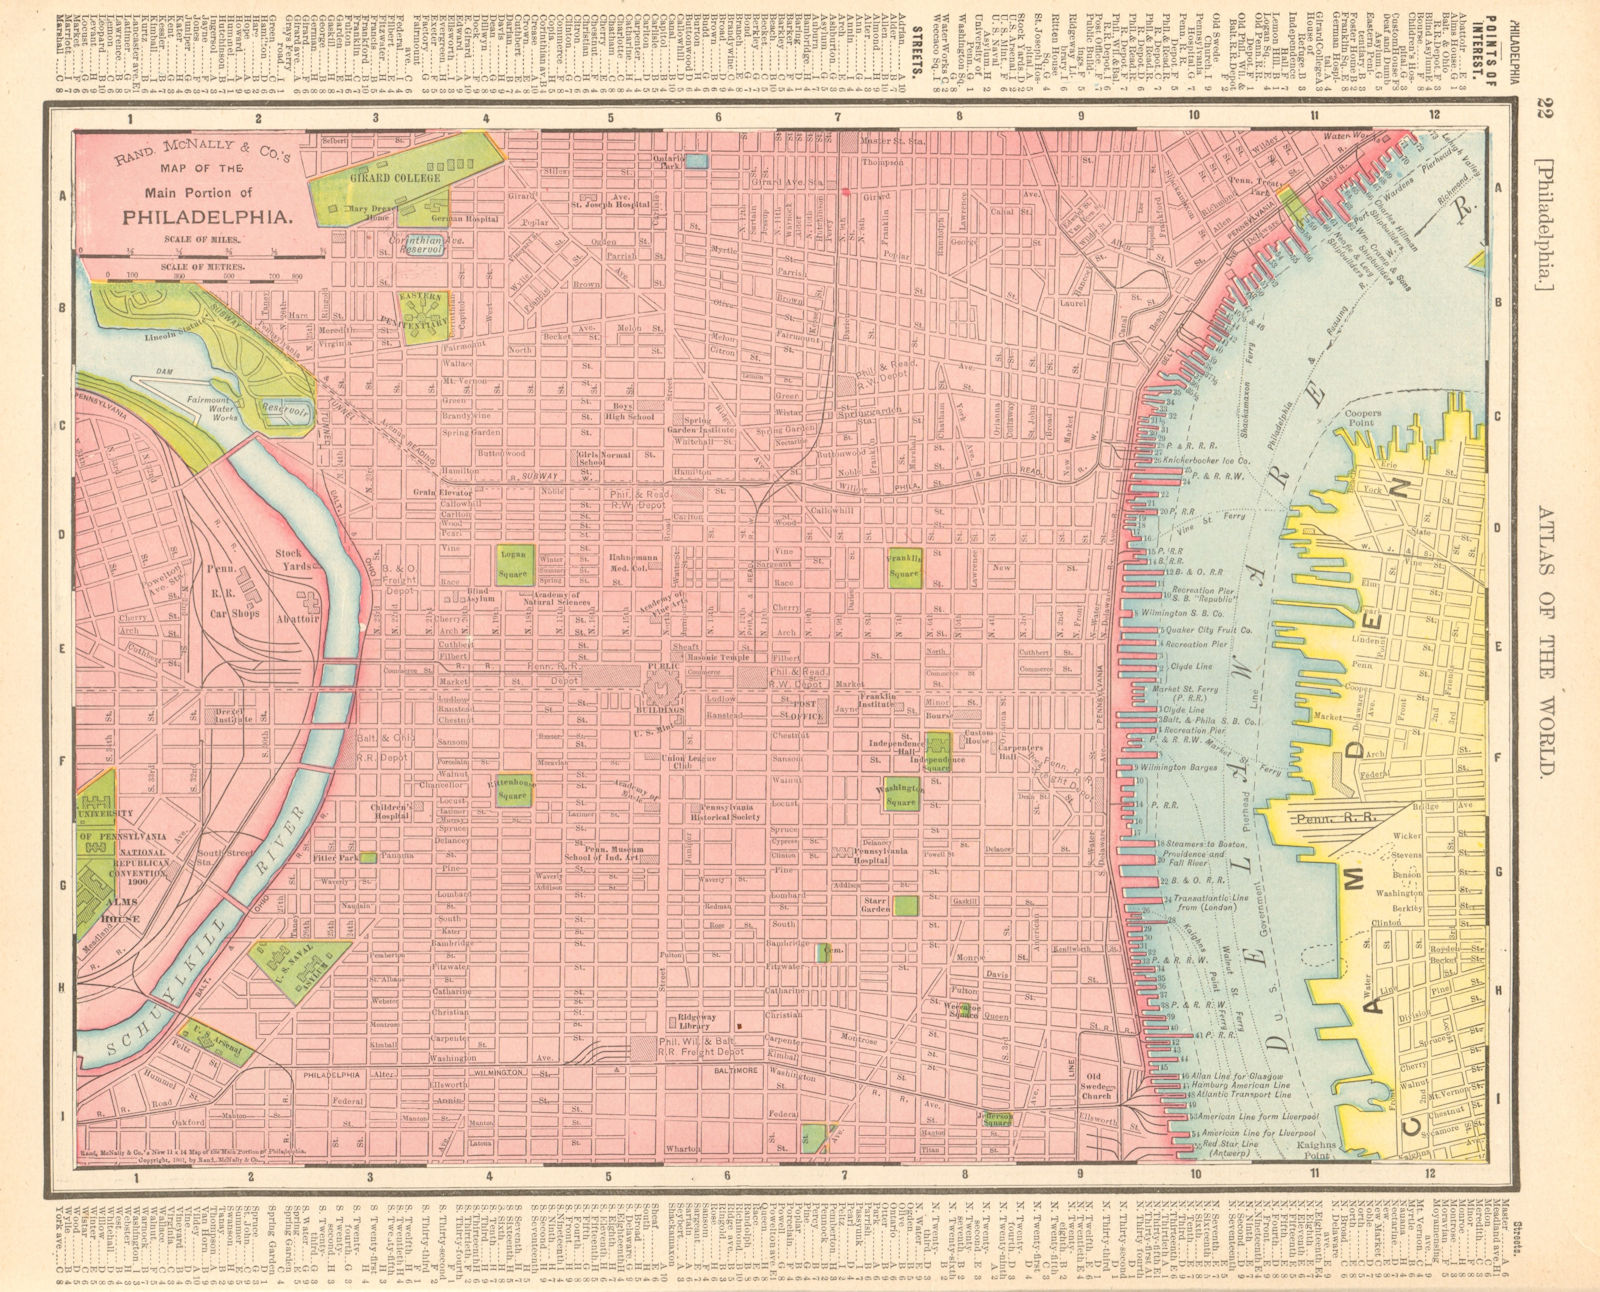 Associate Product Philadelphia town city map plan. Pennsylvania. RAND MCNALLY 1906 old